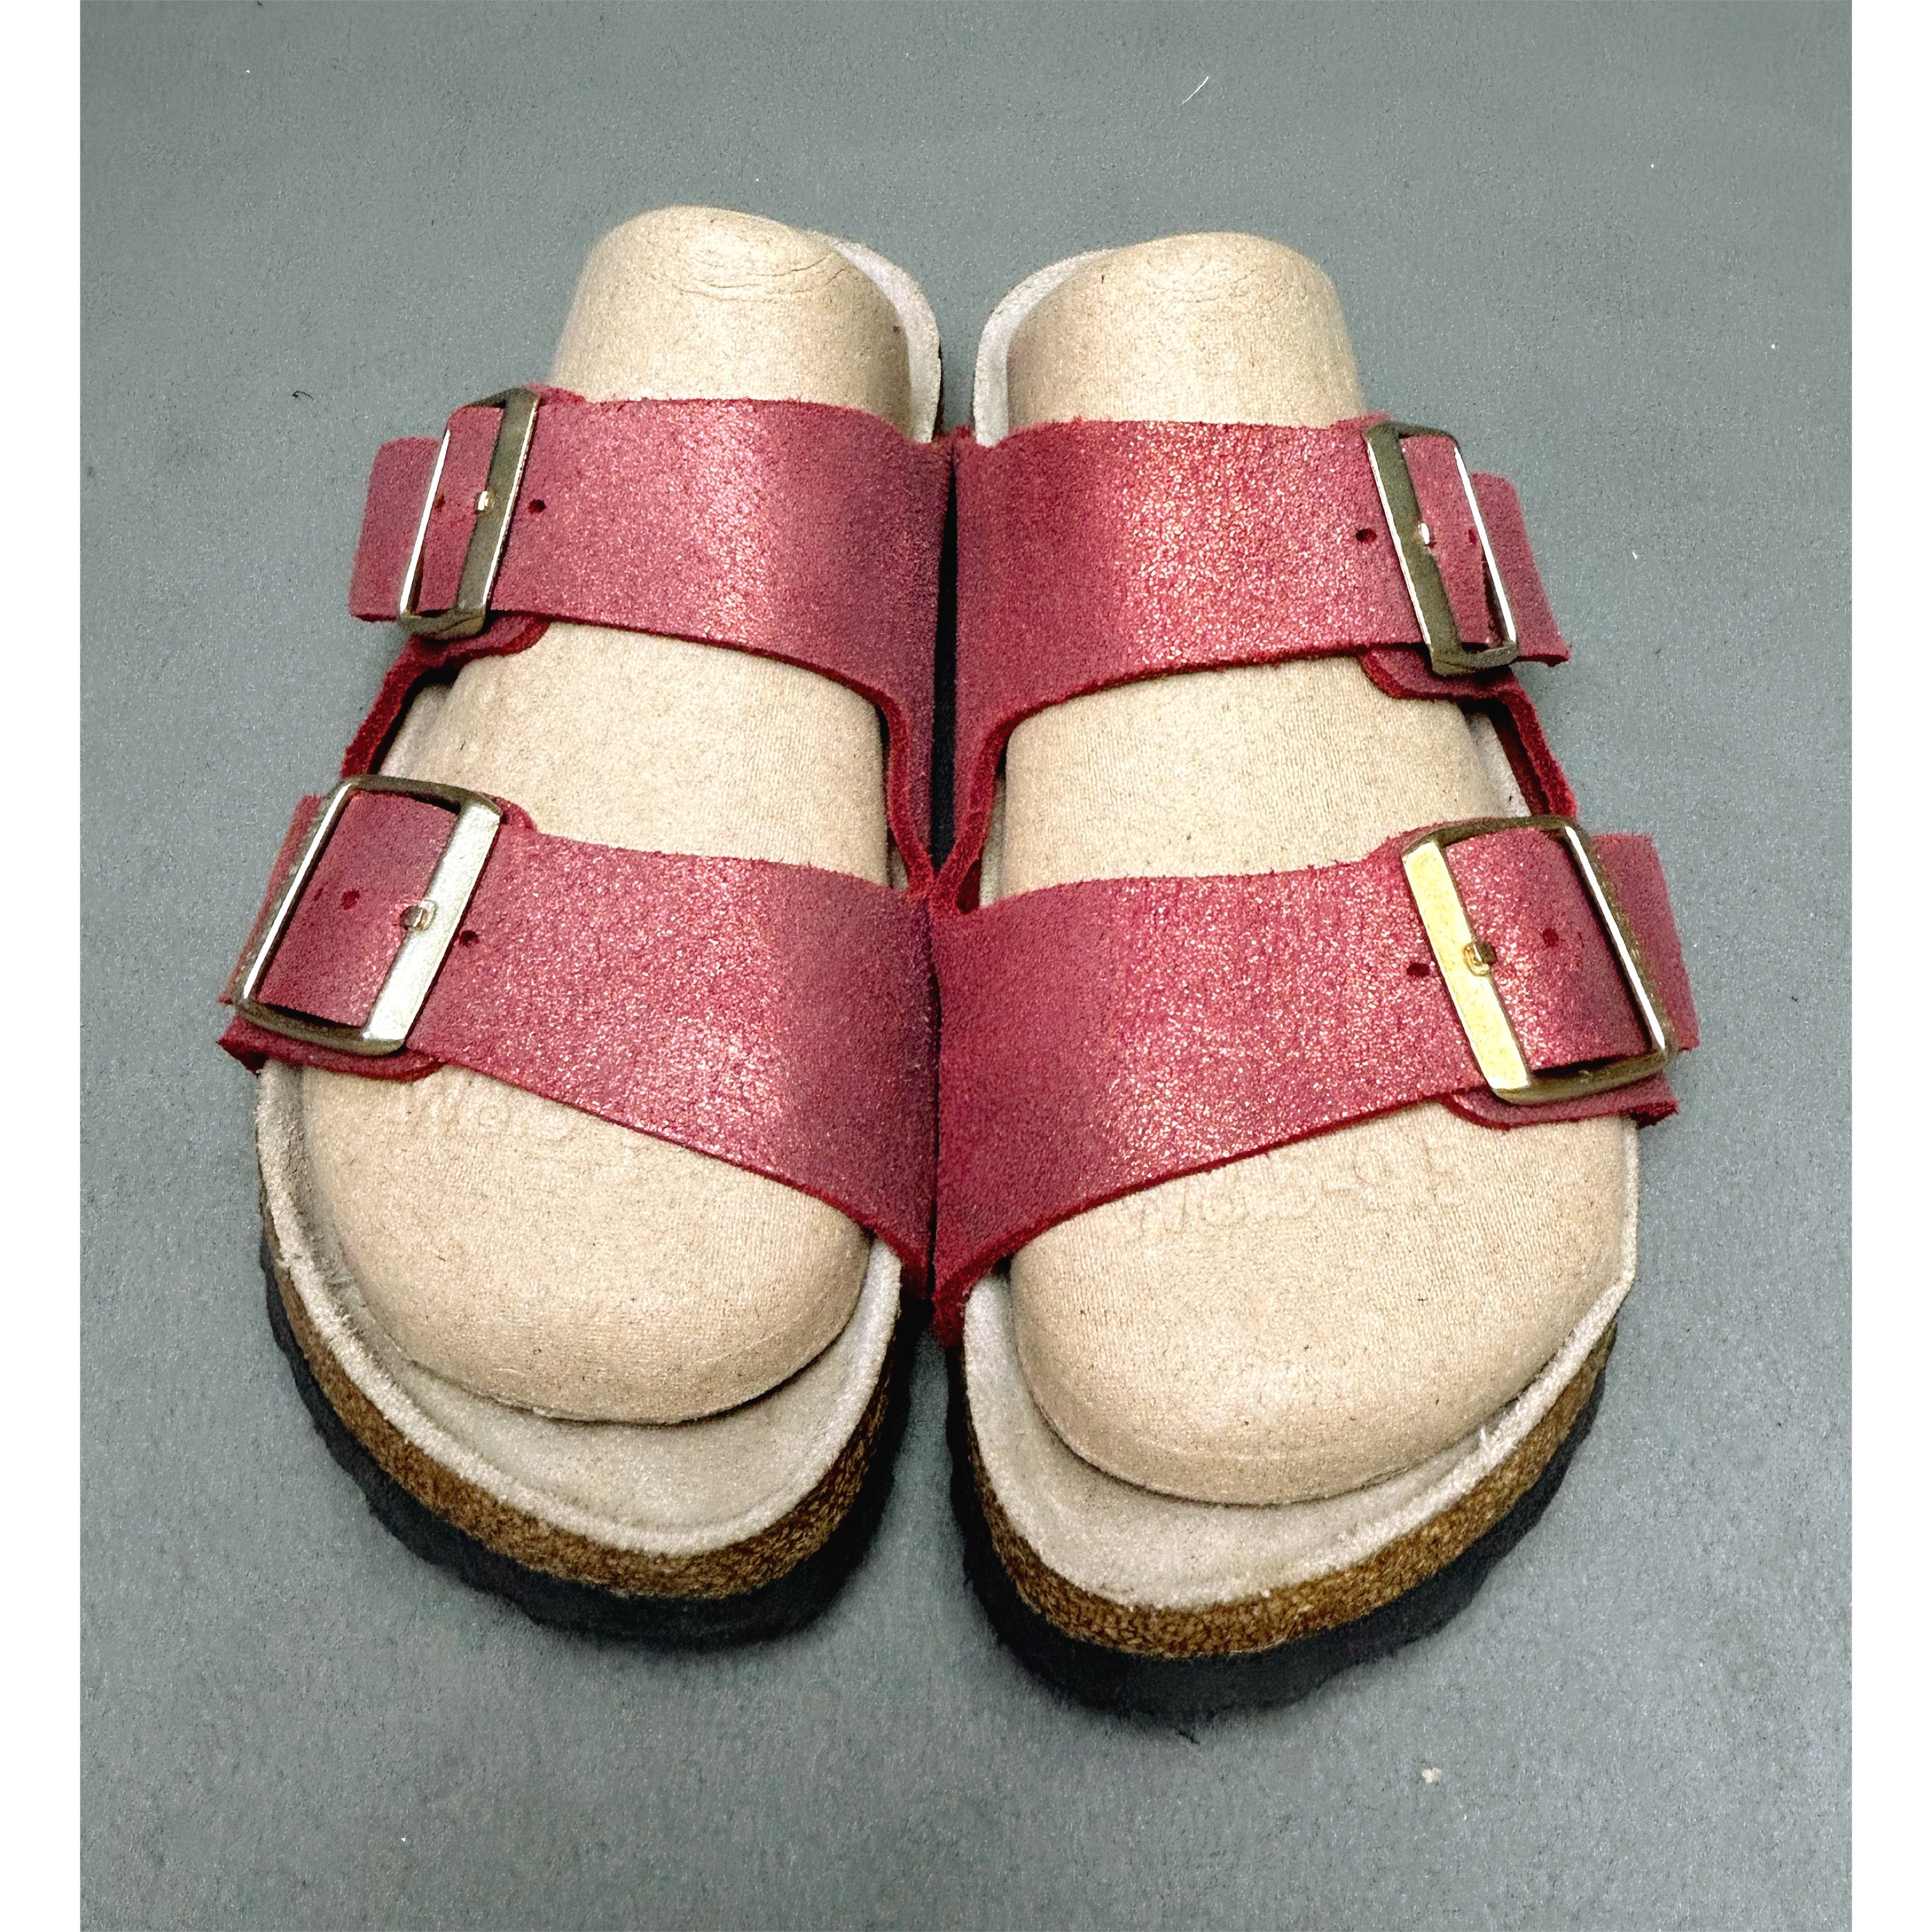 Birkenstock red leather Arizona sandals, size 7-7/5